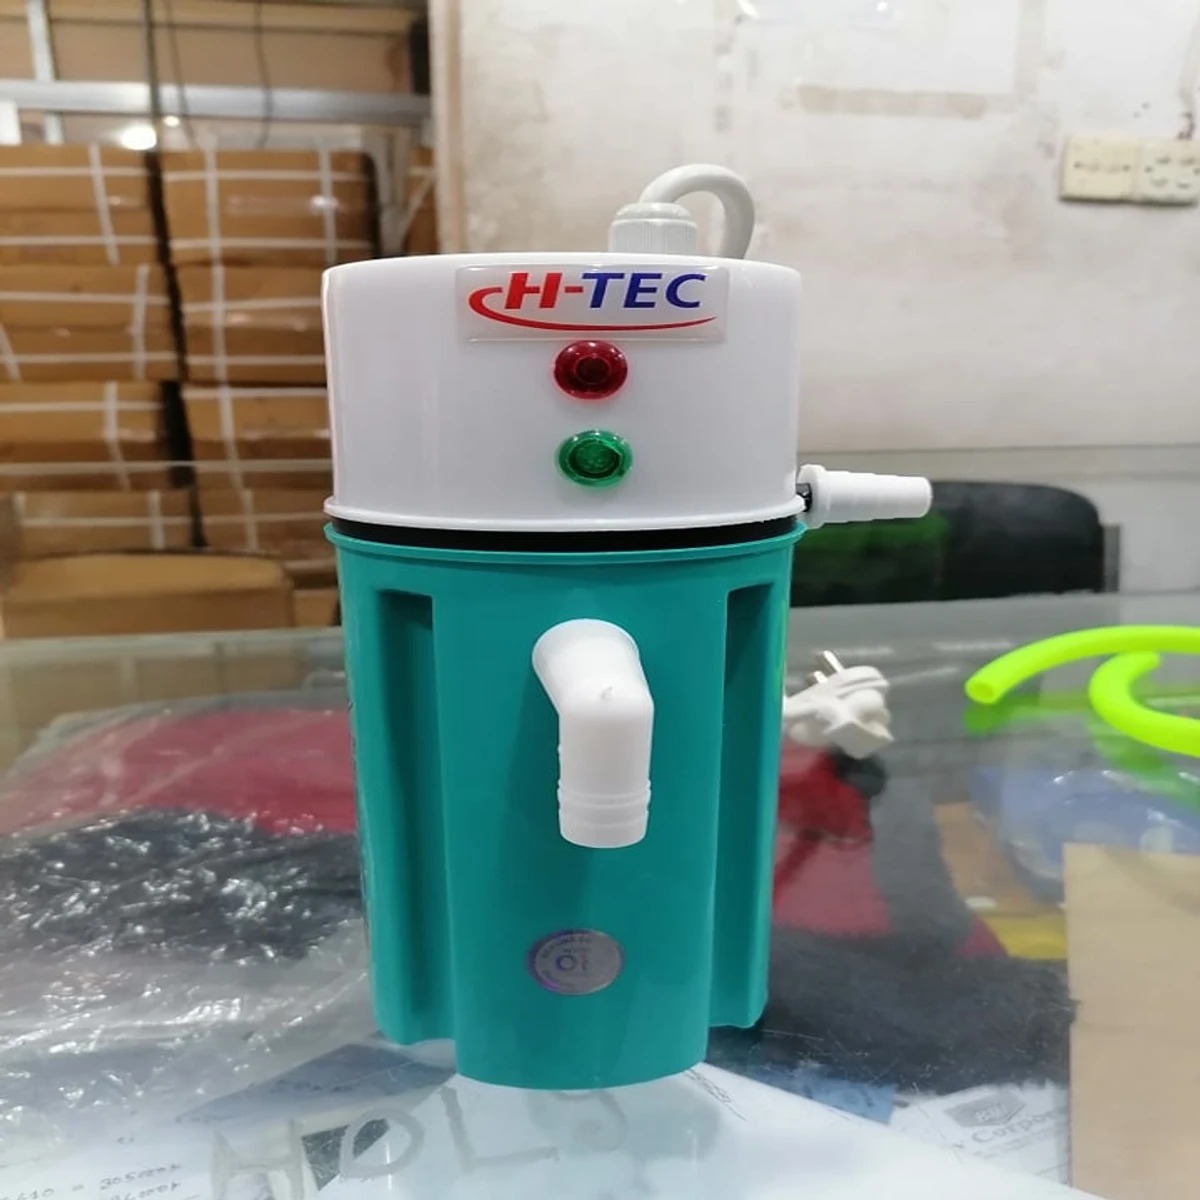 H-TEC Instant Portable Geyser